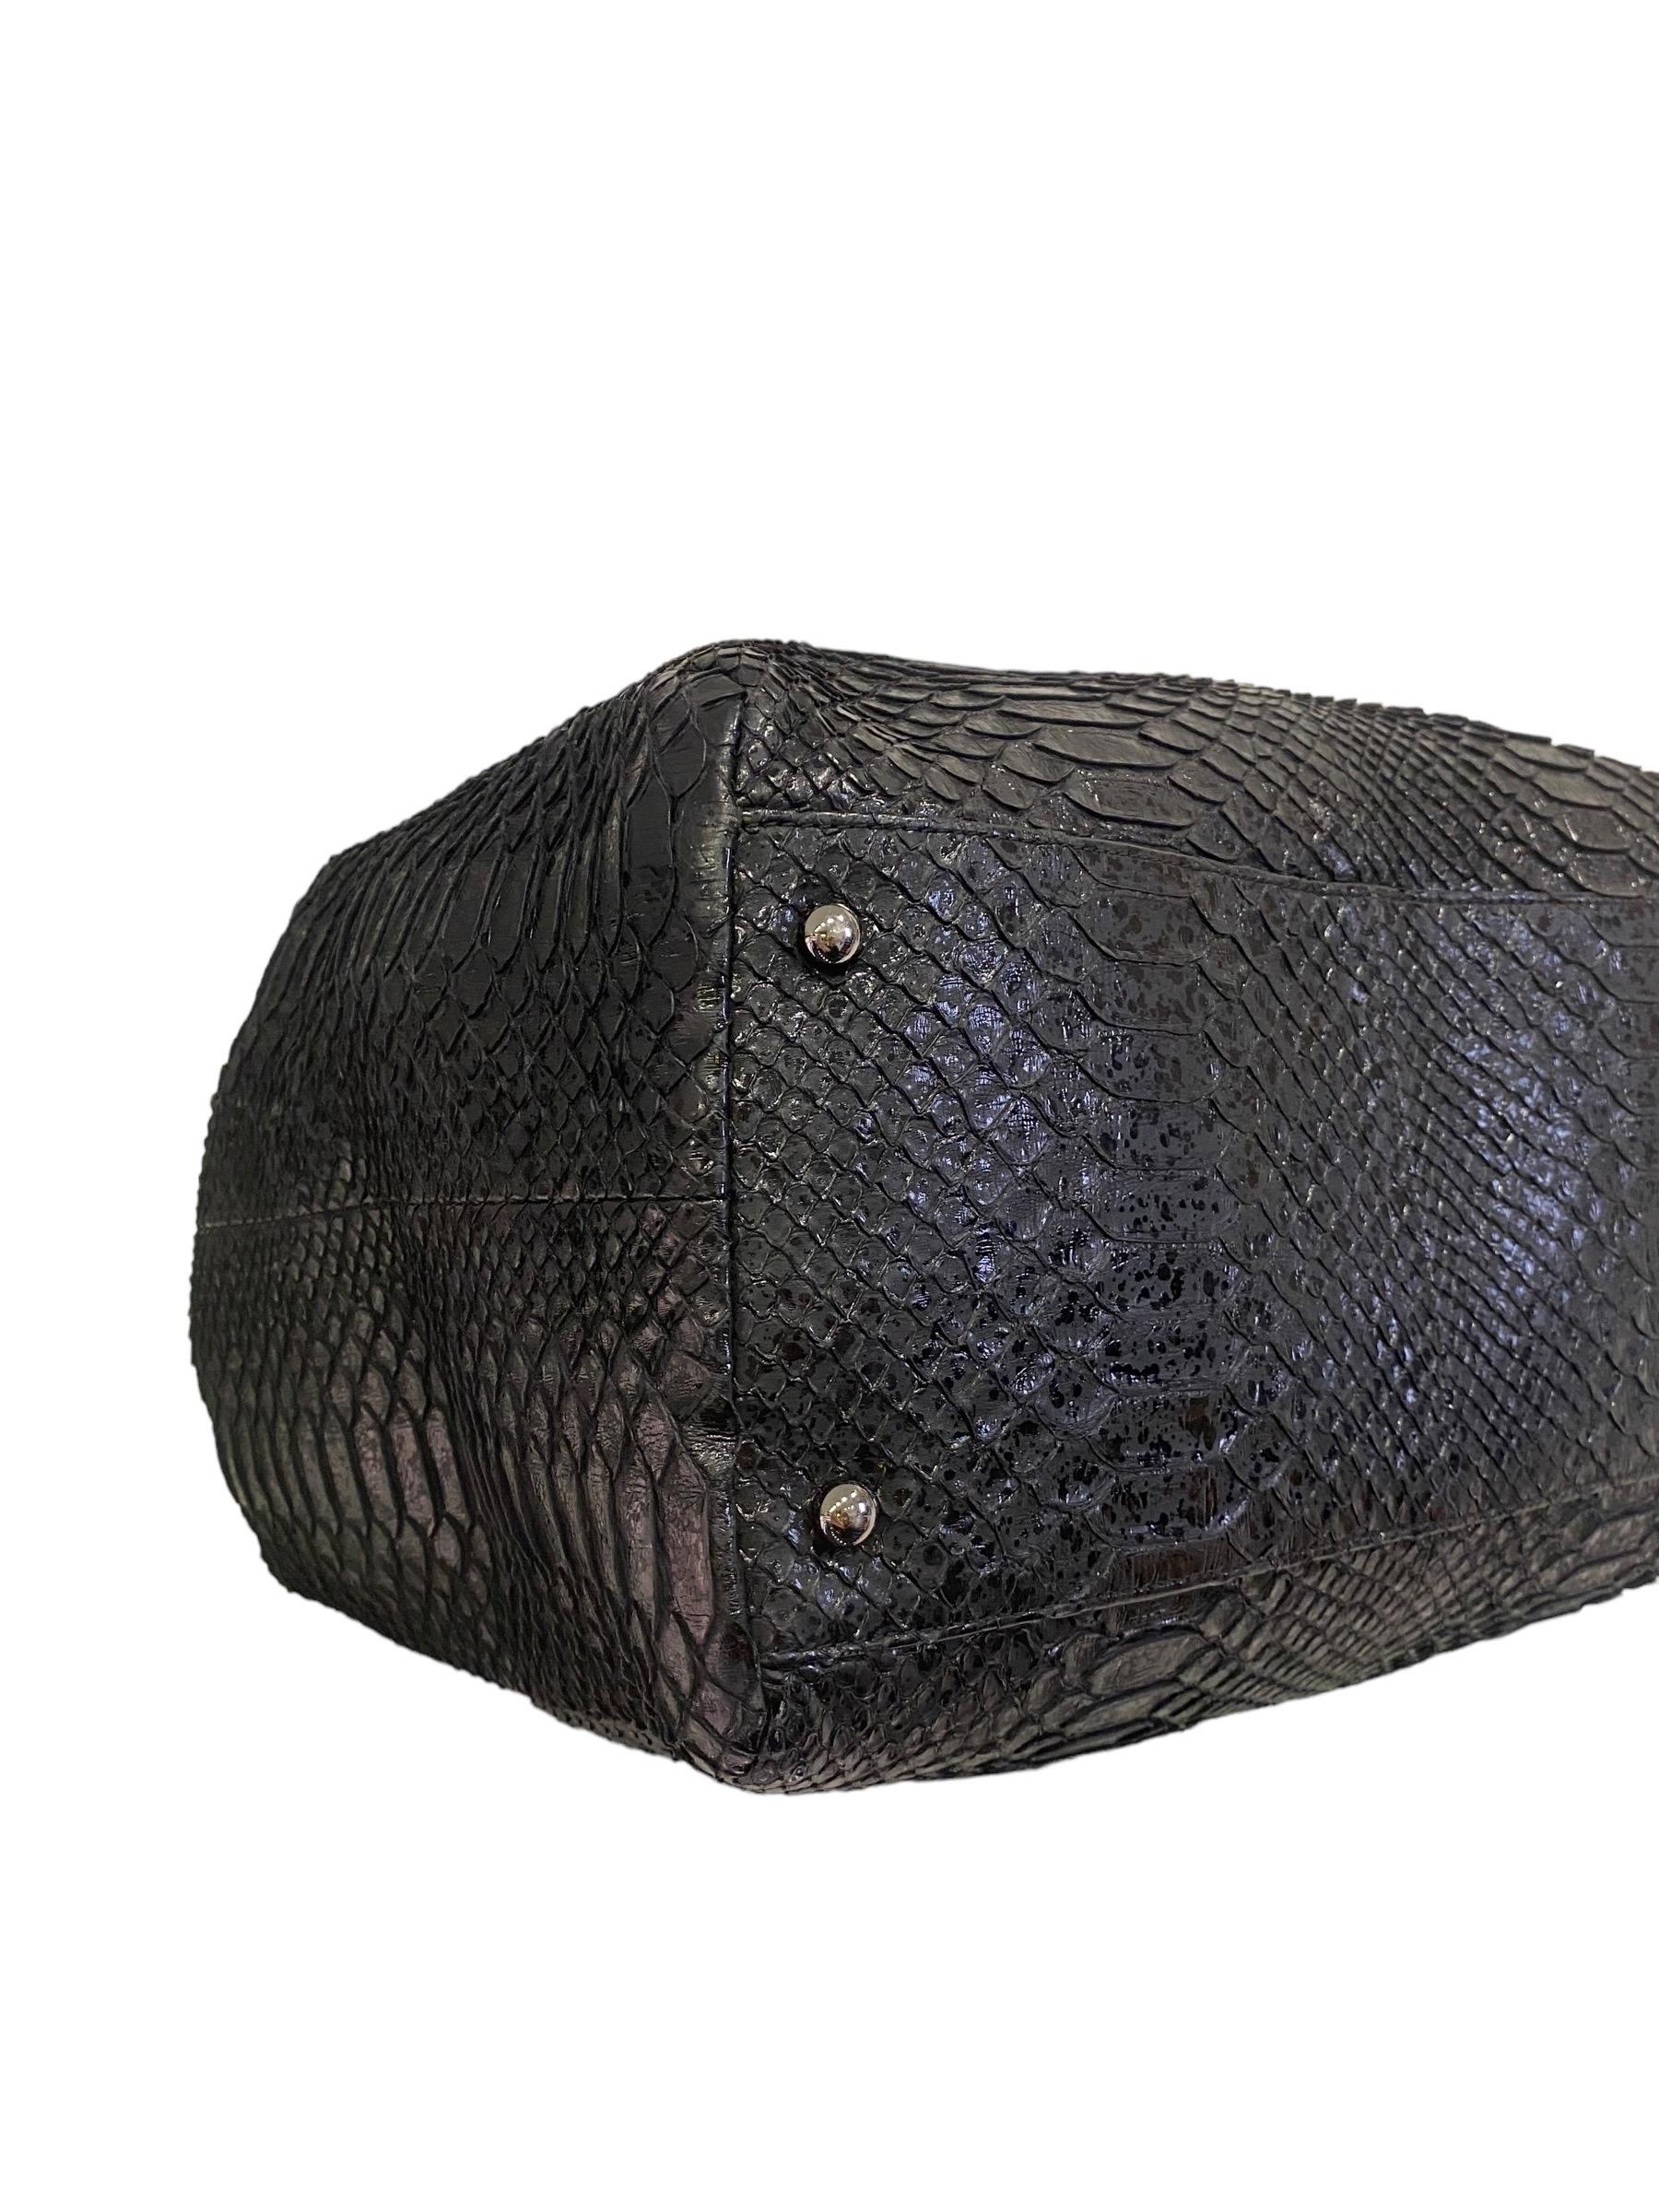 2009 Chanel Tote Black Piton Hobo Bag For Sale 4